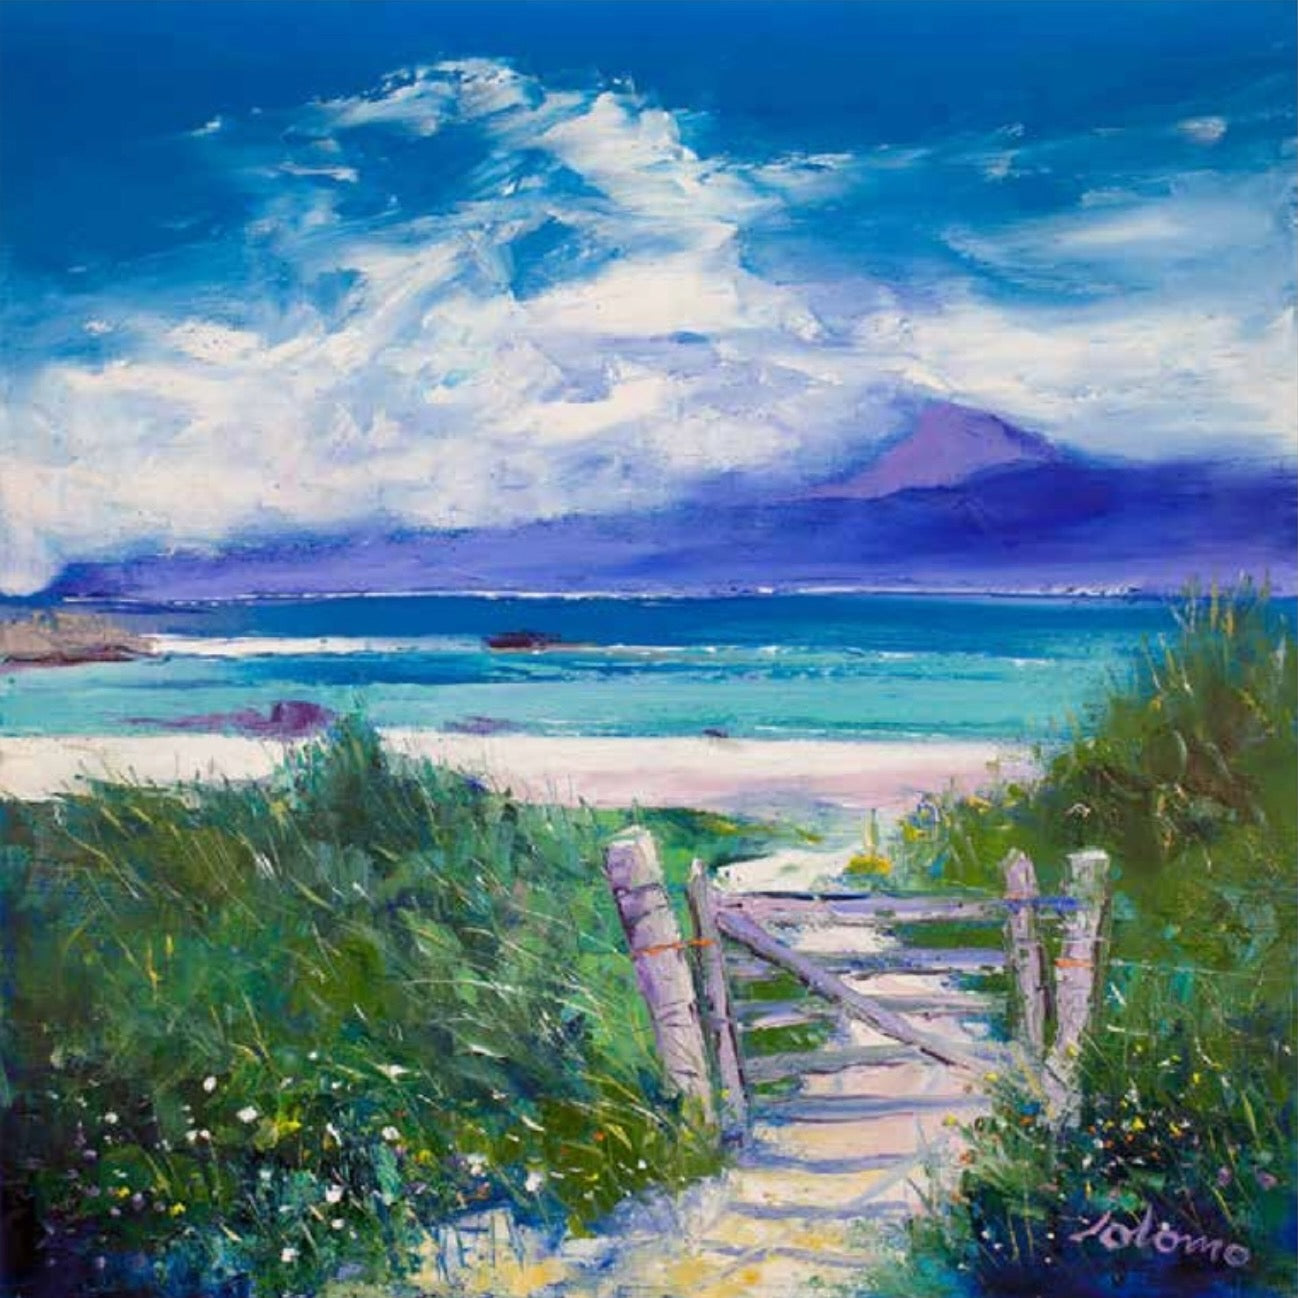 Summer Morninglight Beach Path, Iona by John Lowrie Morrison (JOLOMO) Framed Art